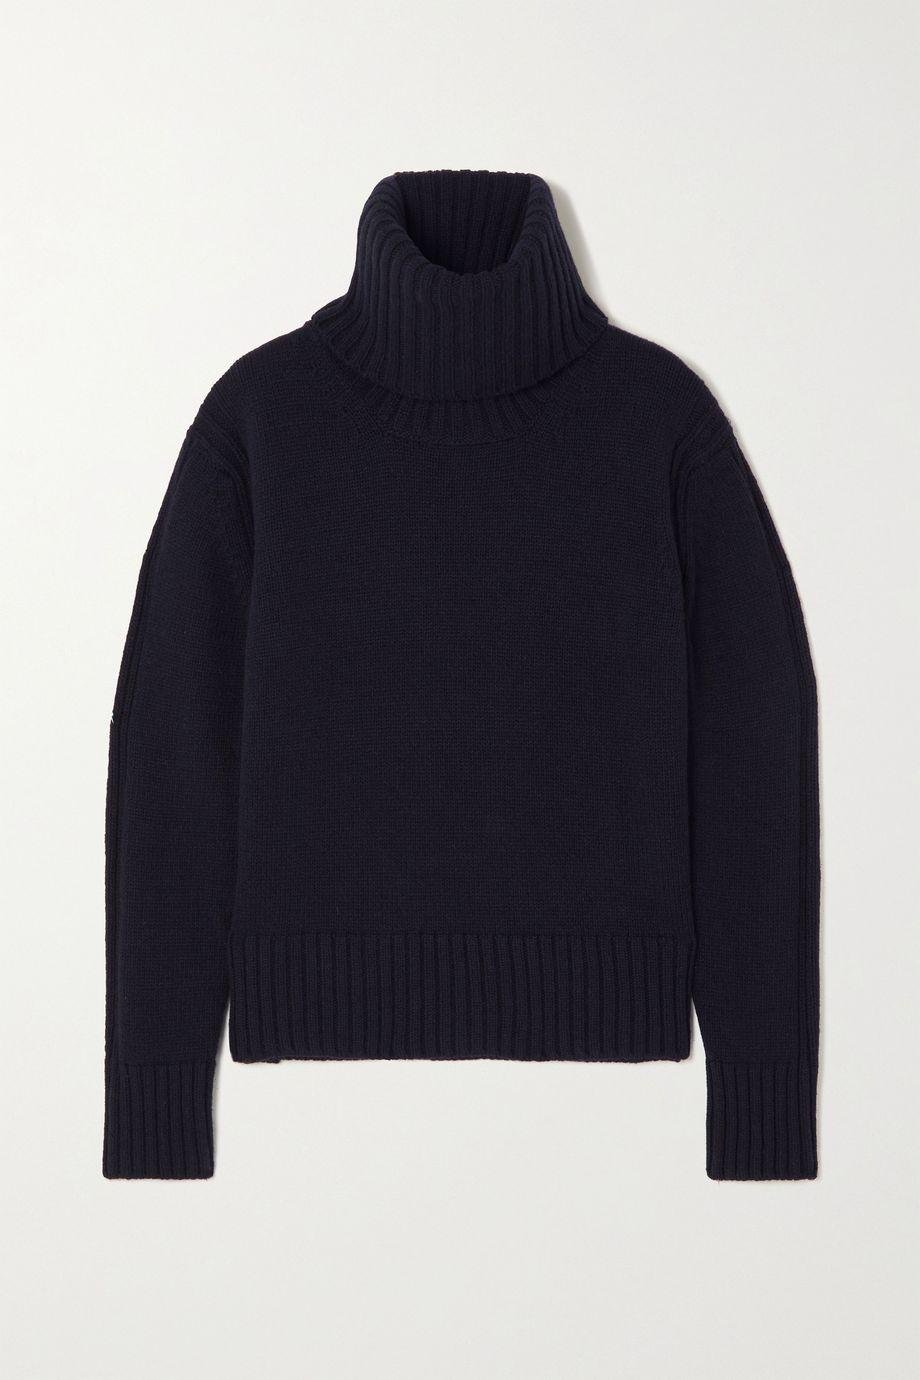 Roshin wool turtleneck sweater by &DAUGHTER